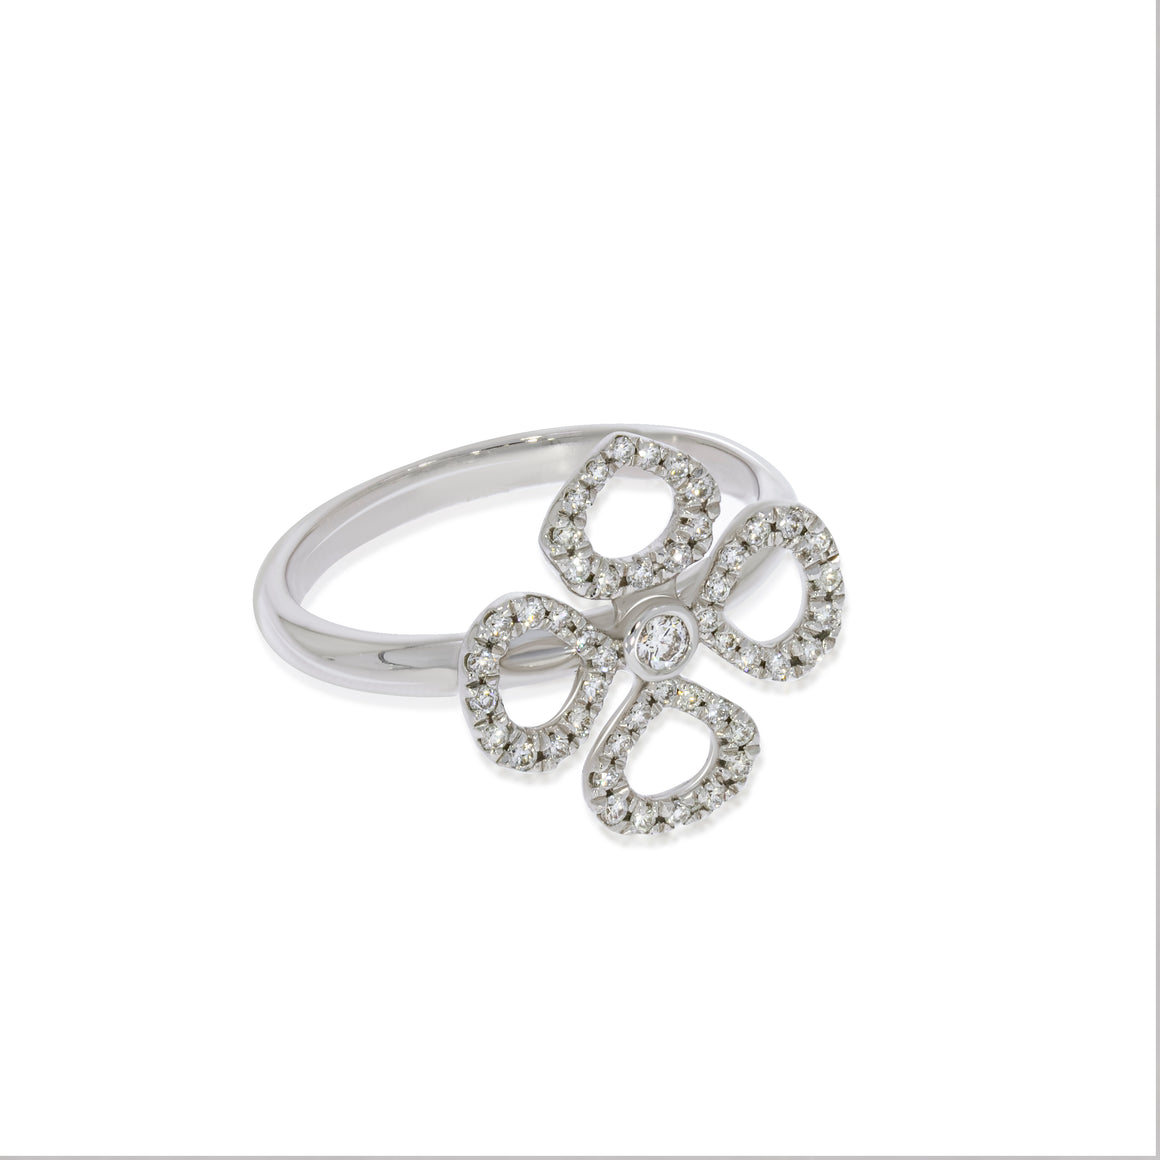 Gentle flower petals stud diamonds rings in 18K white gold set with 48 round diamonds. elegant pave stud ring. engagement / weeding rings.